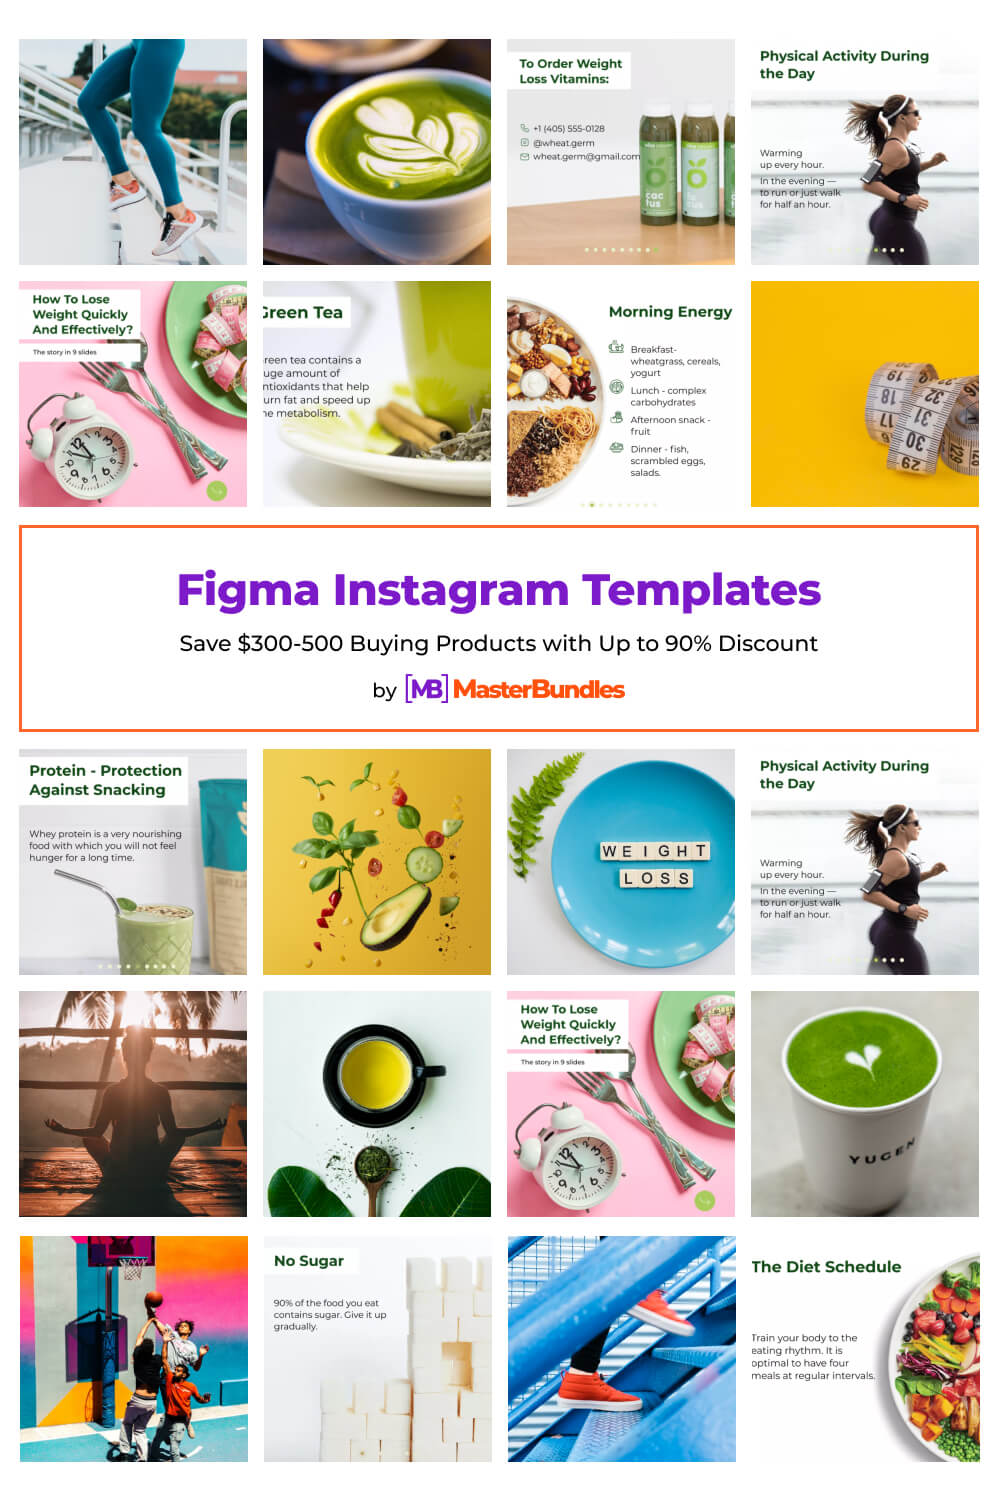 figma instagram templates pinterest image.